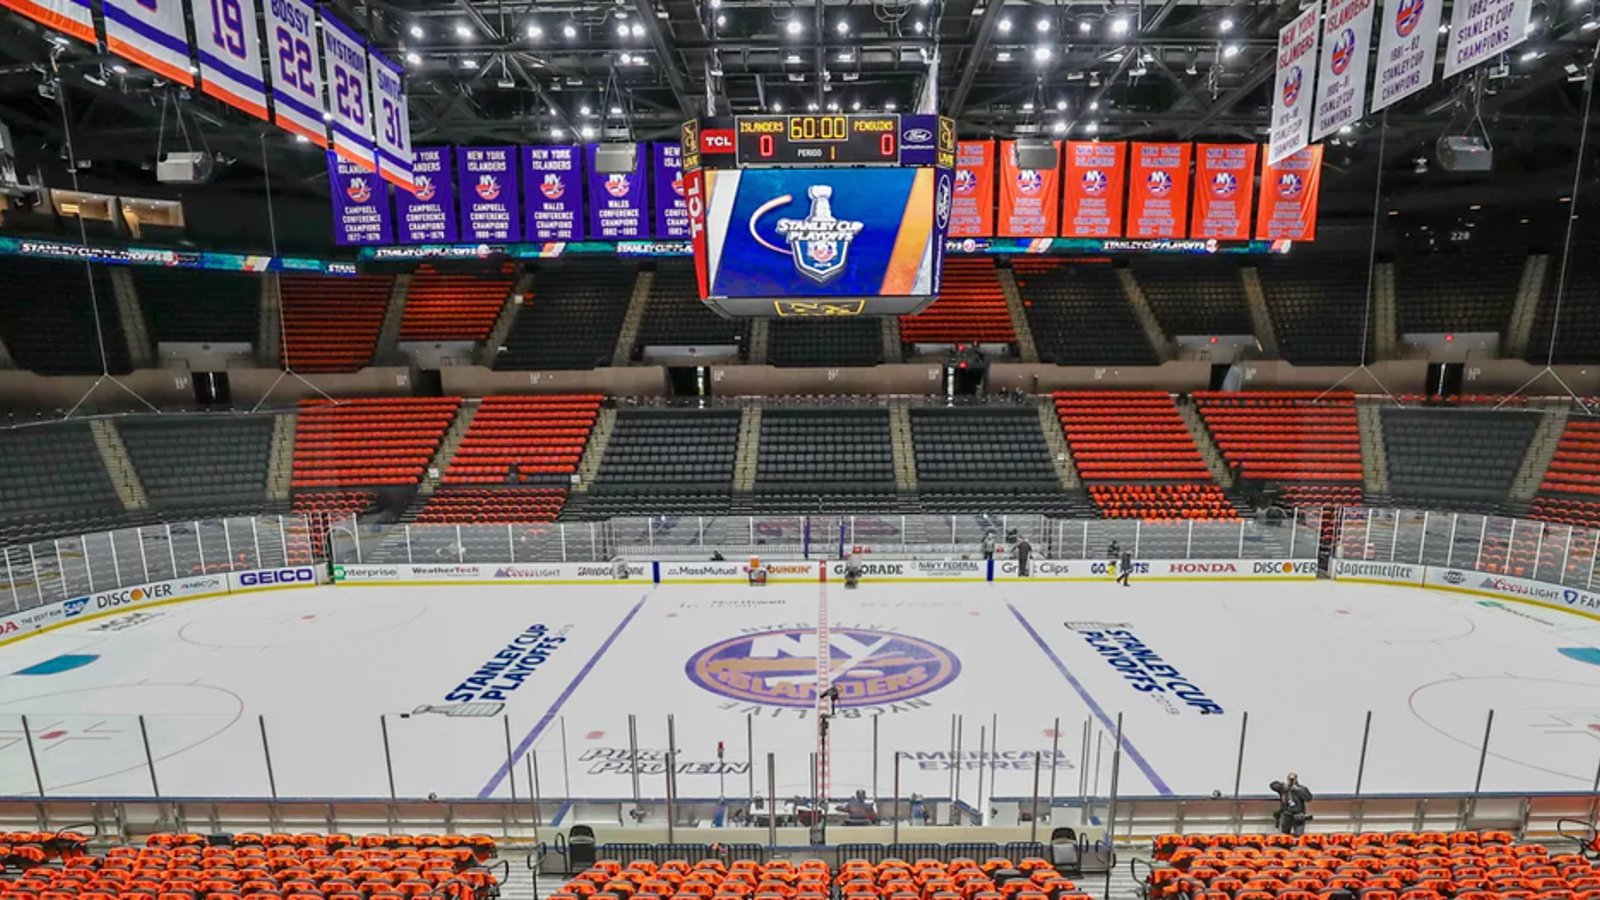 Nassau Coliseum, the Islanders’ current home arena, announces permanent closure